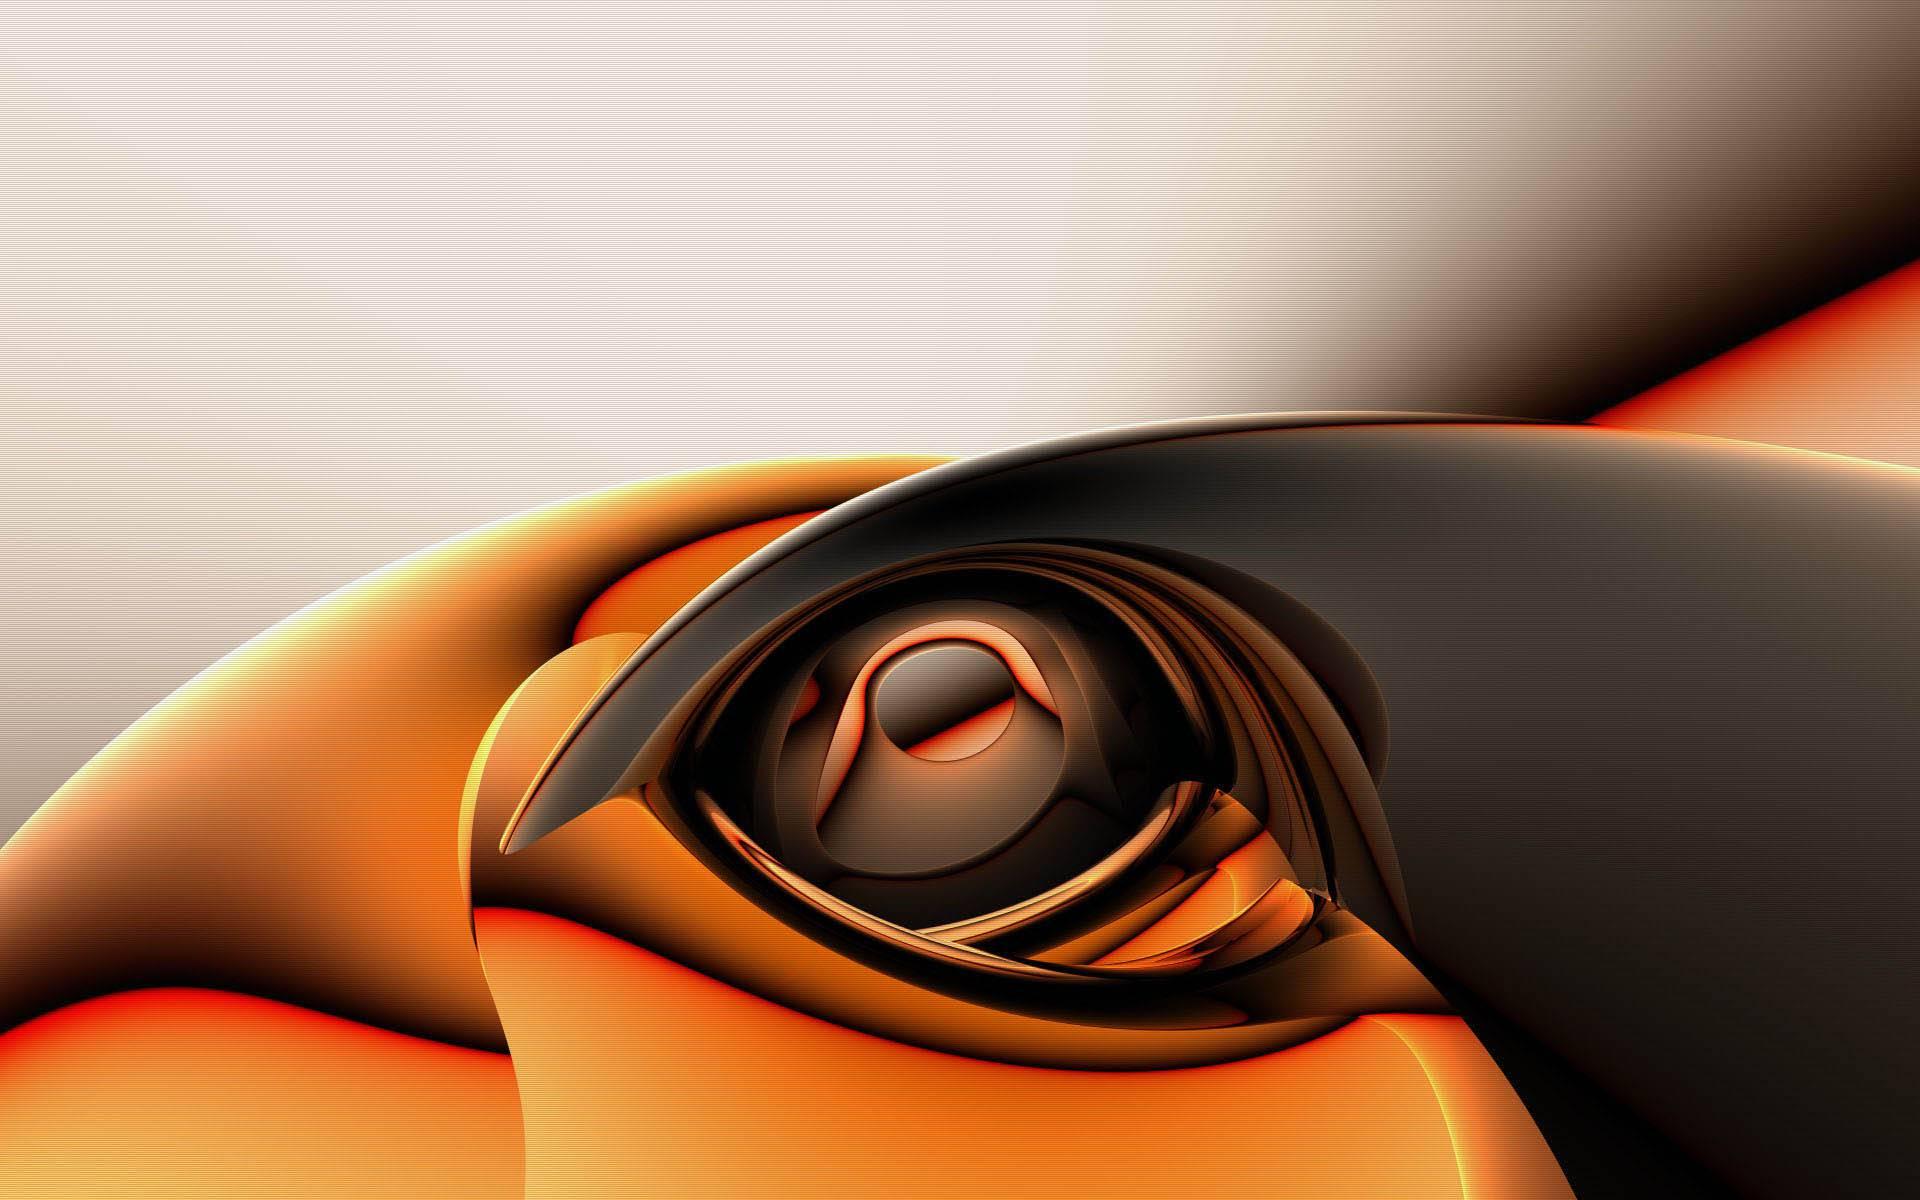 3D Art Orange Image Wallpaper